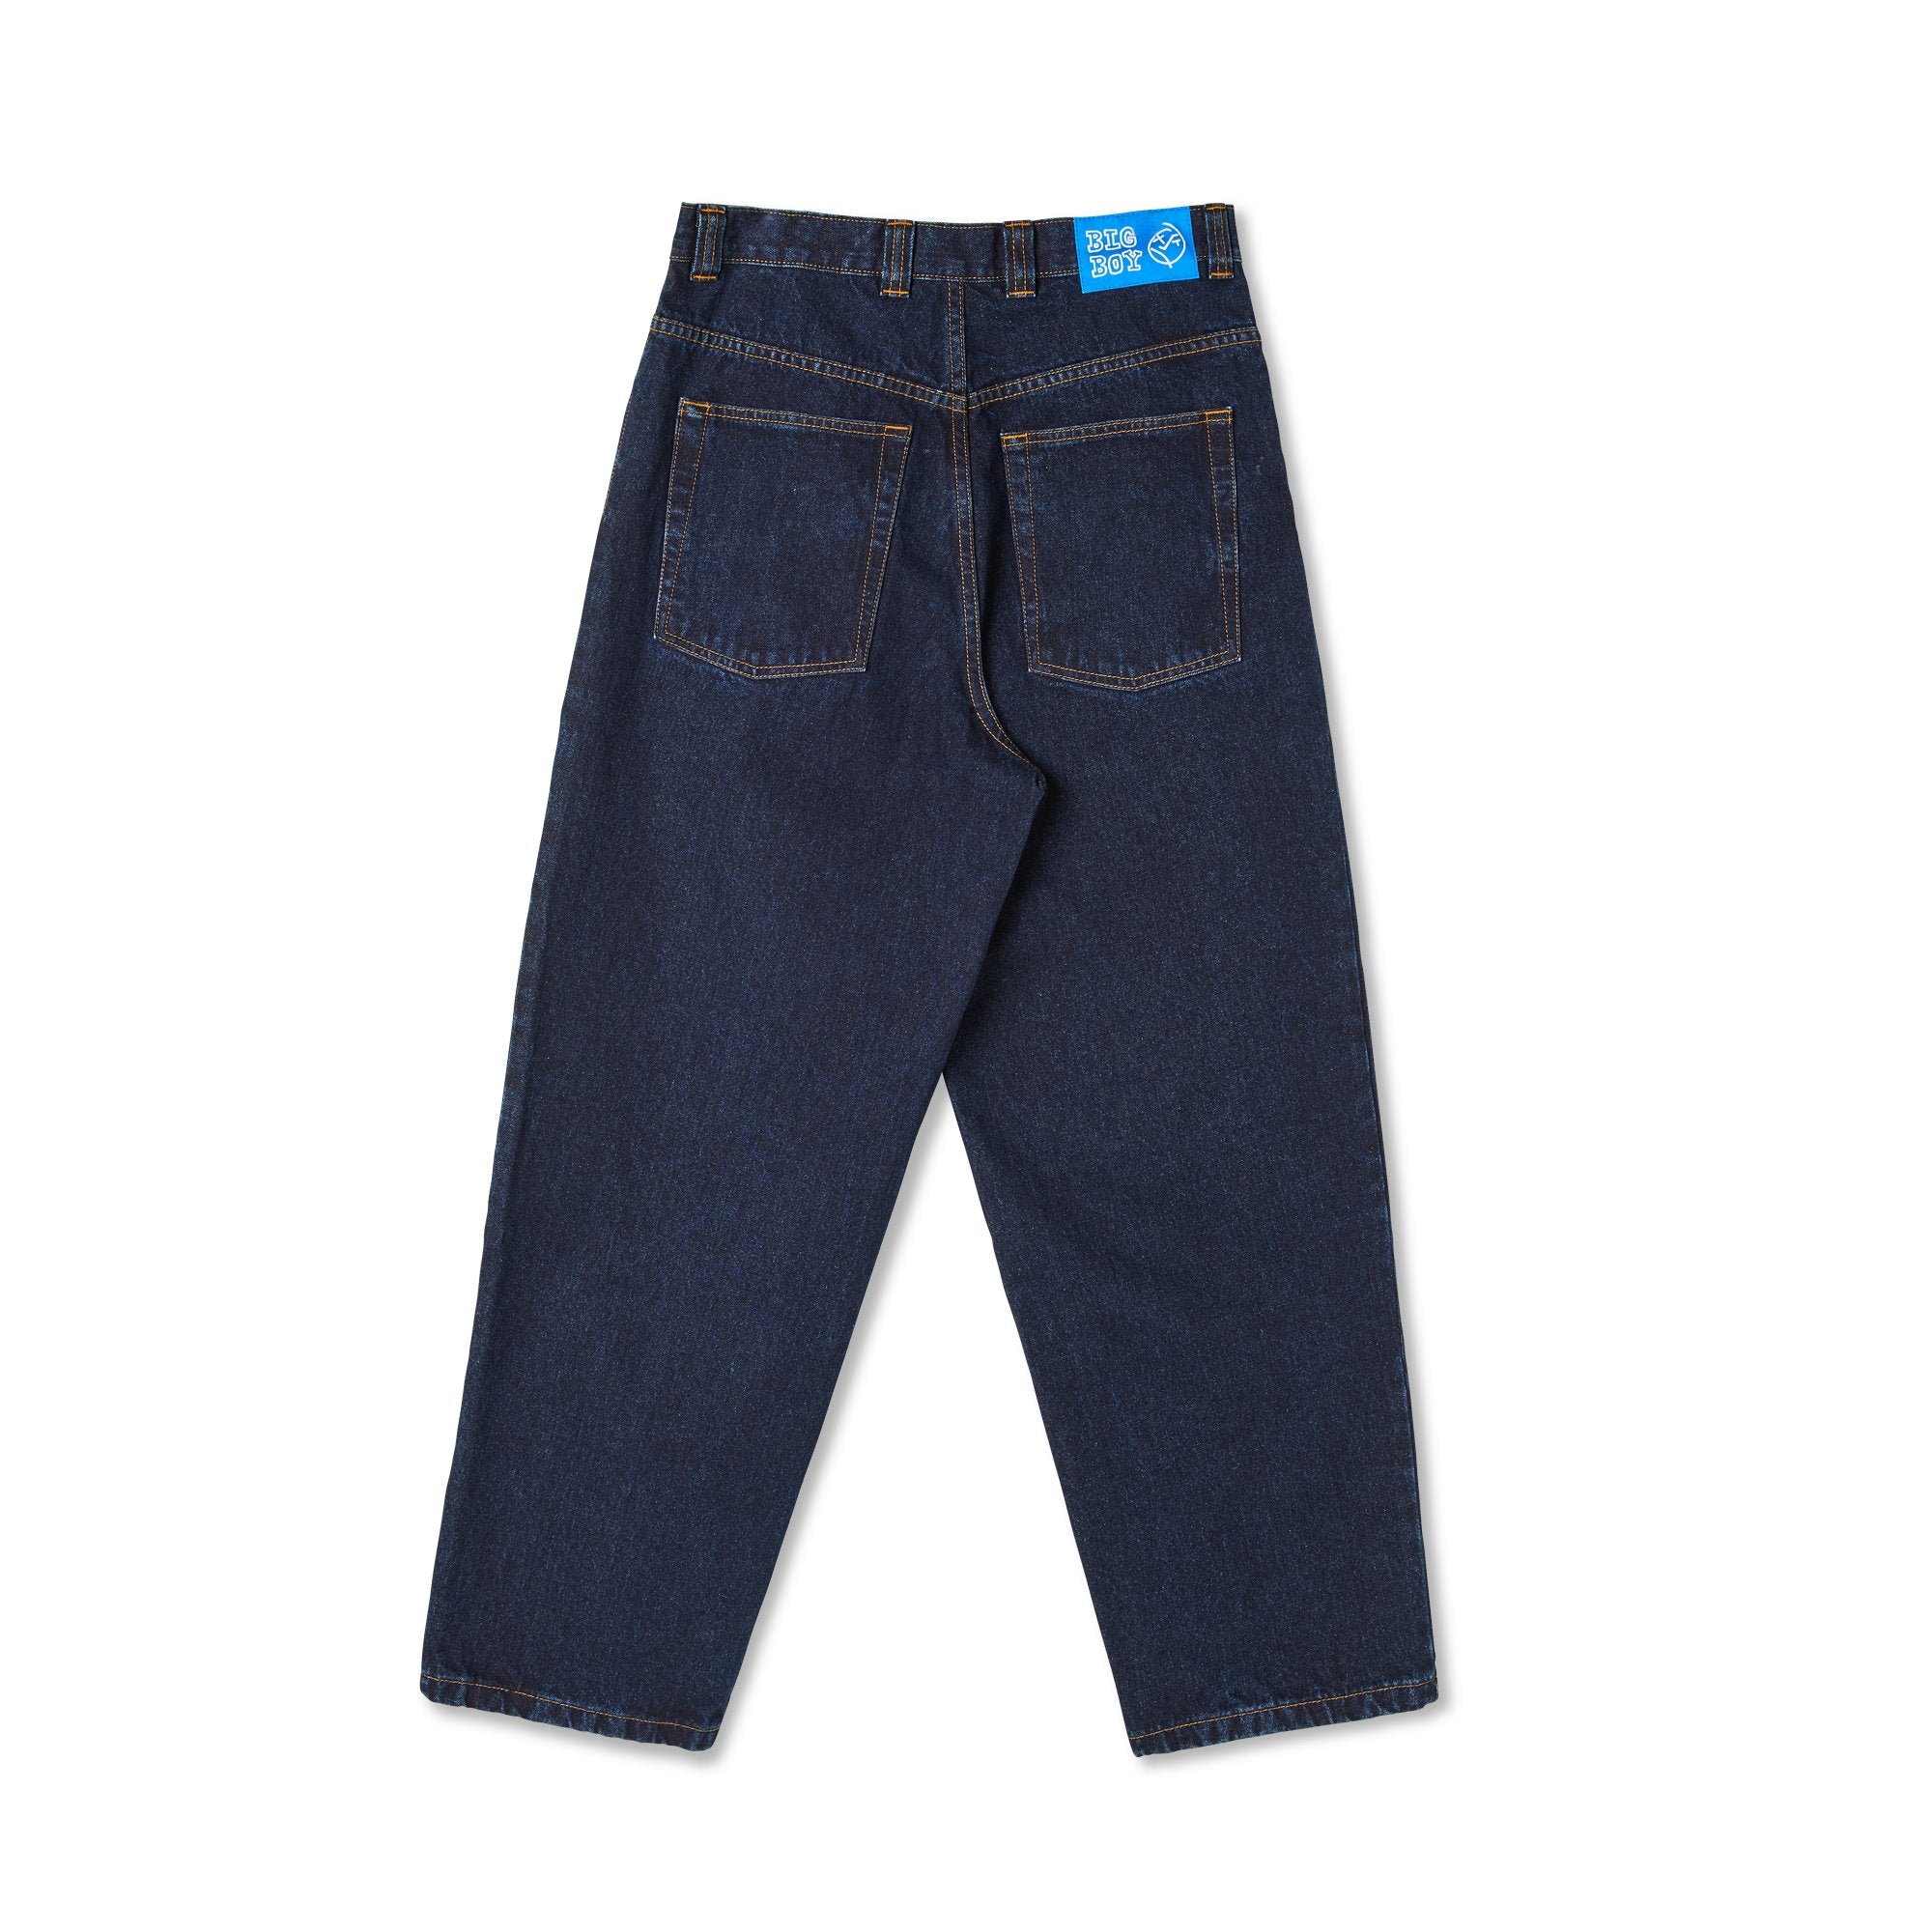 Polar Skate Co. - Big Boy Denim Jeans - Deep Blue